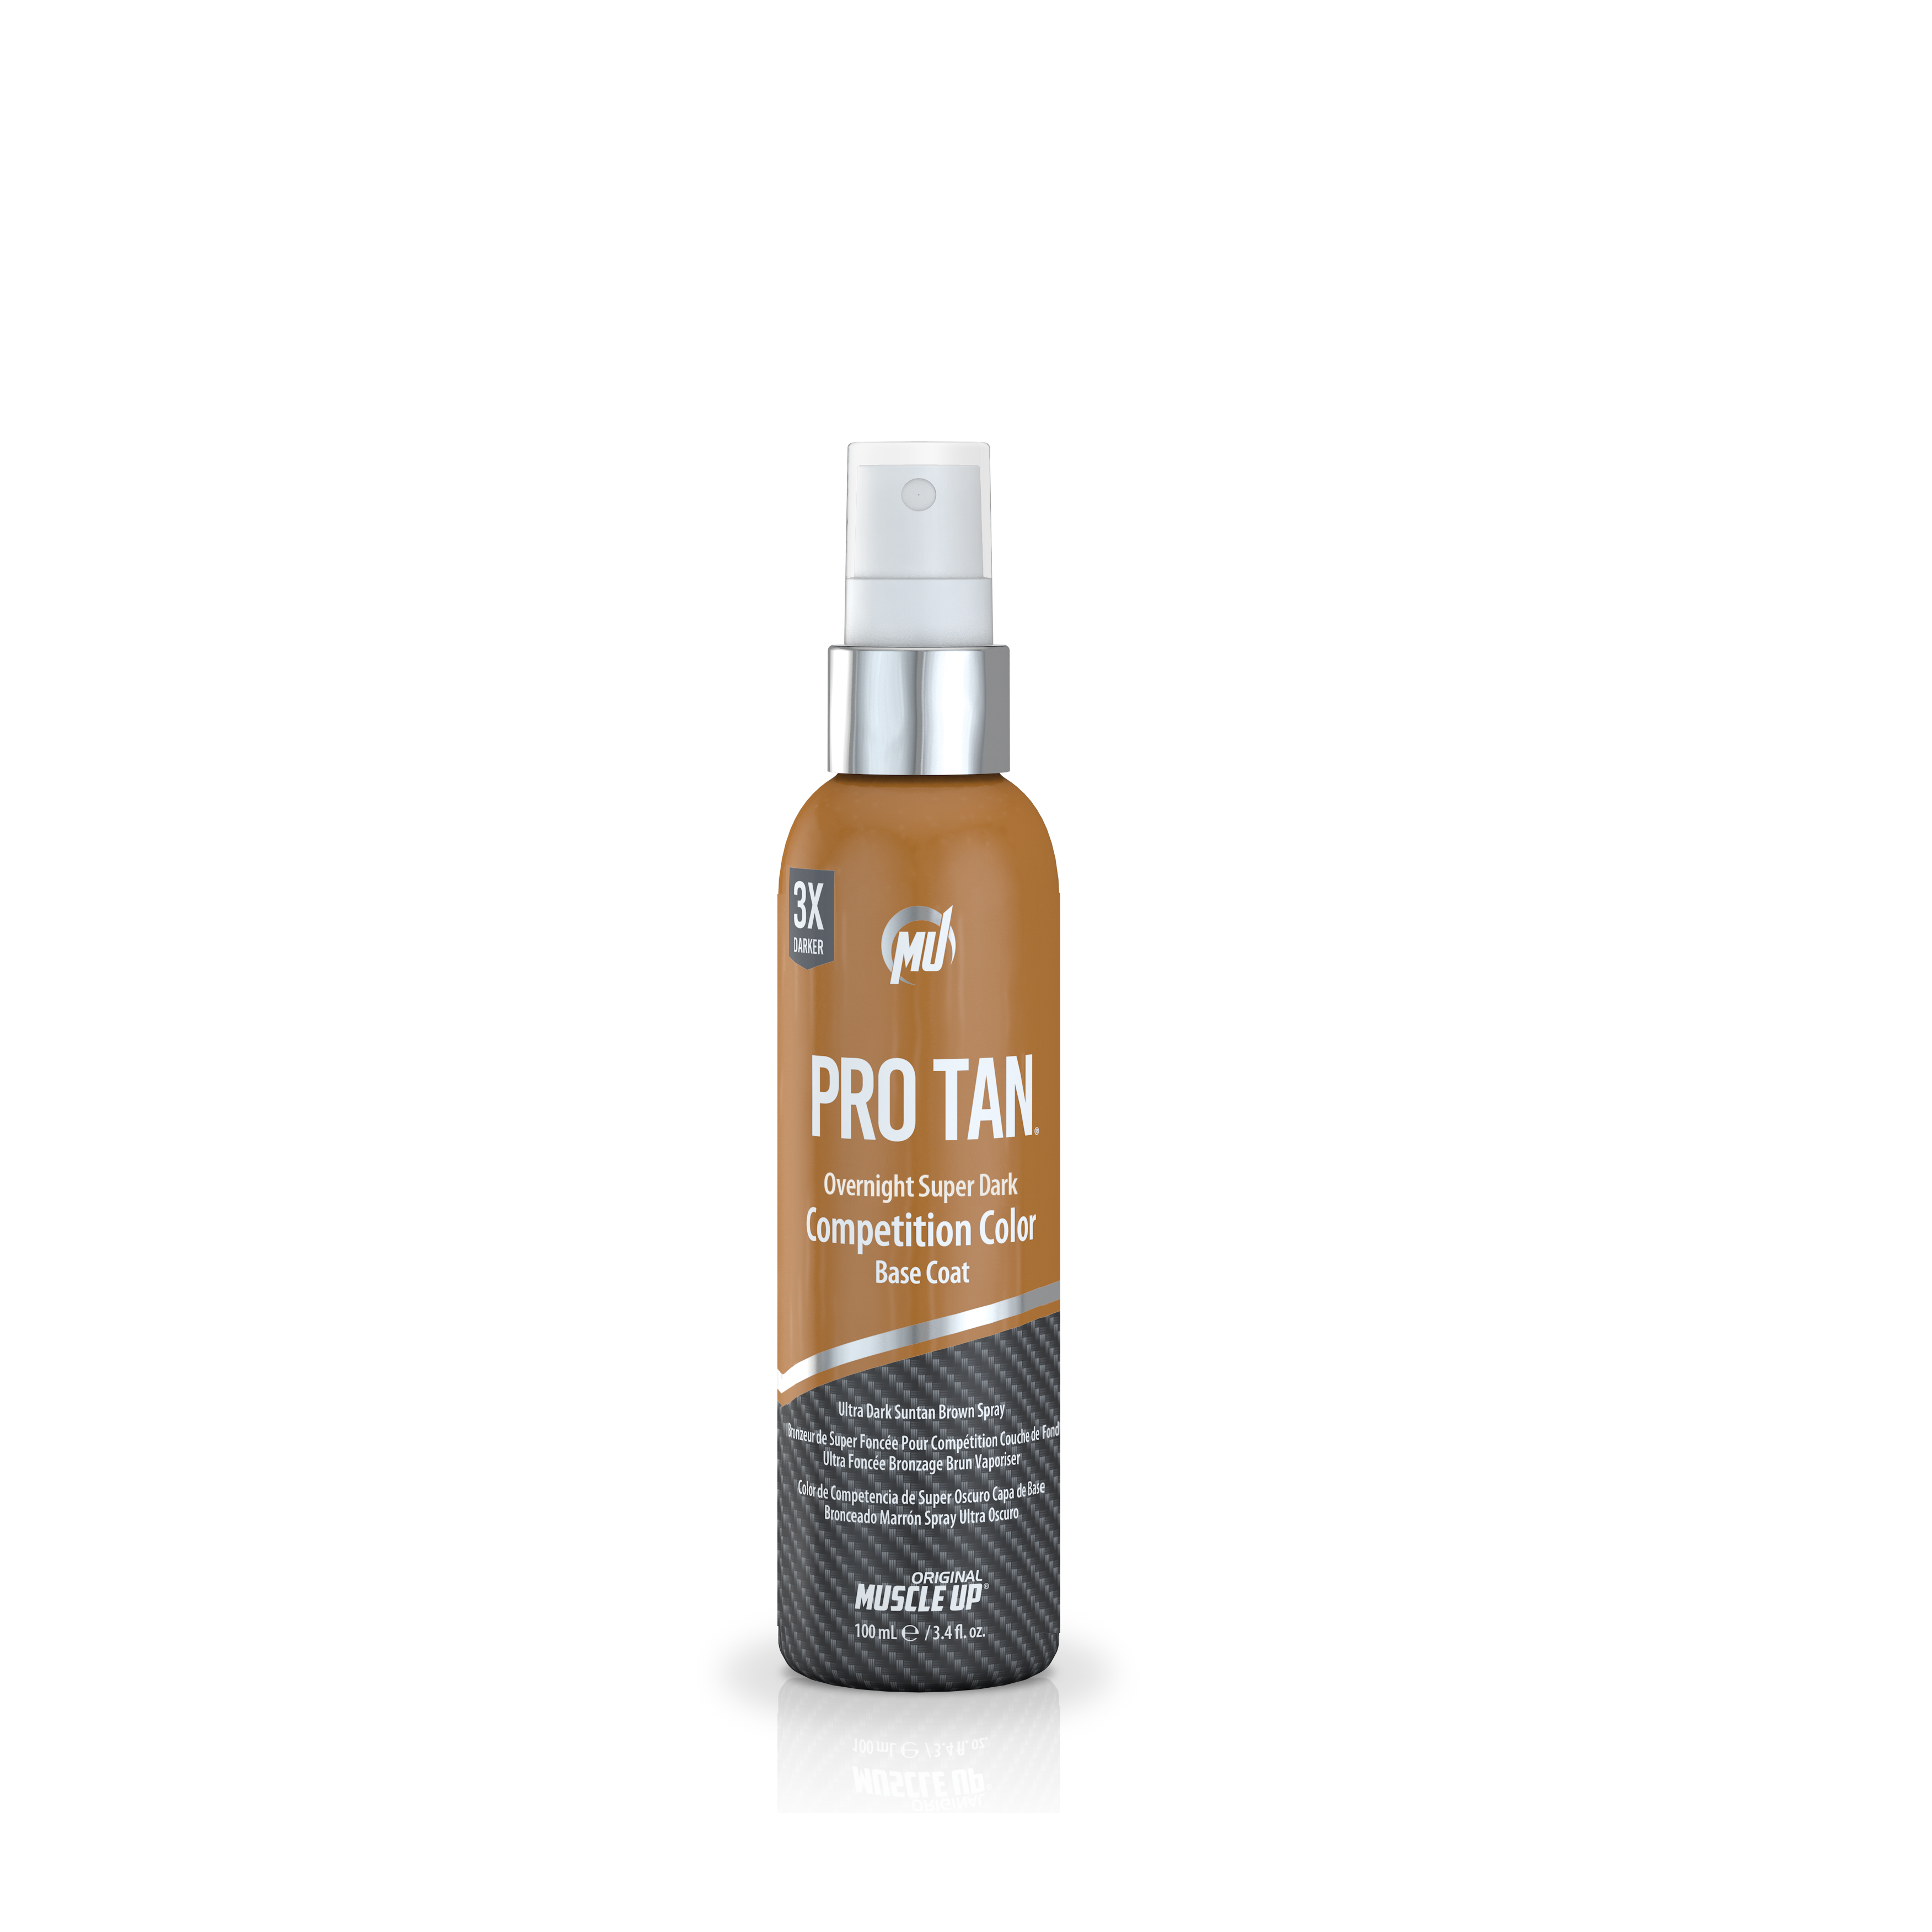 Pro Tan® Competition Tanning - #1 Worldwide Since 1987  Pro Tan Super Dark  Competition Color - Ultra Dark Suntan Brown Spray